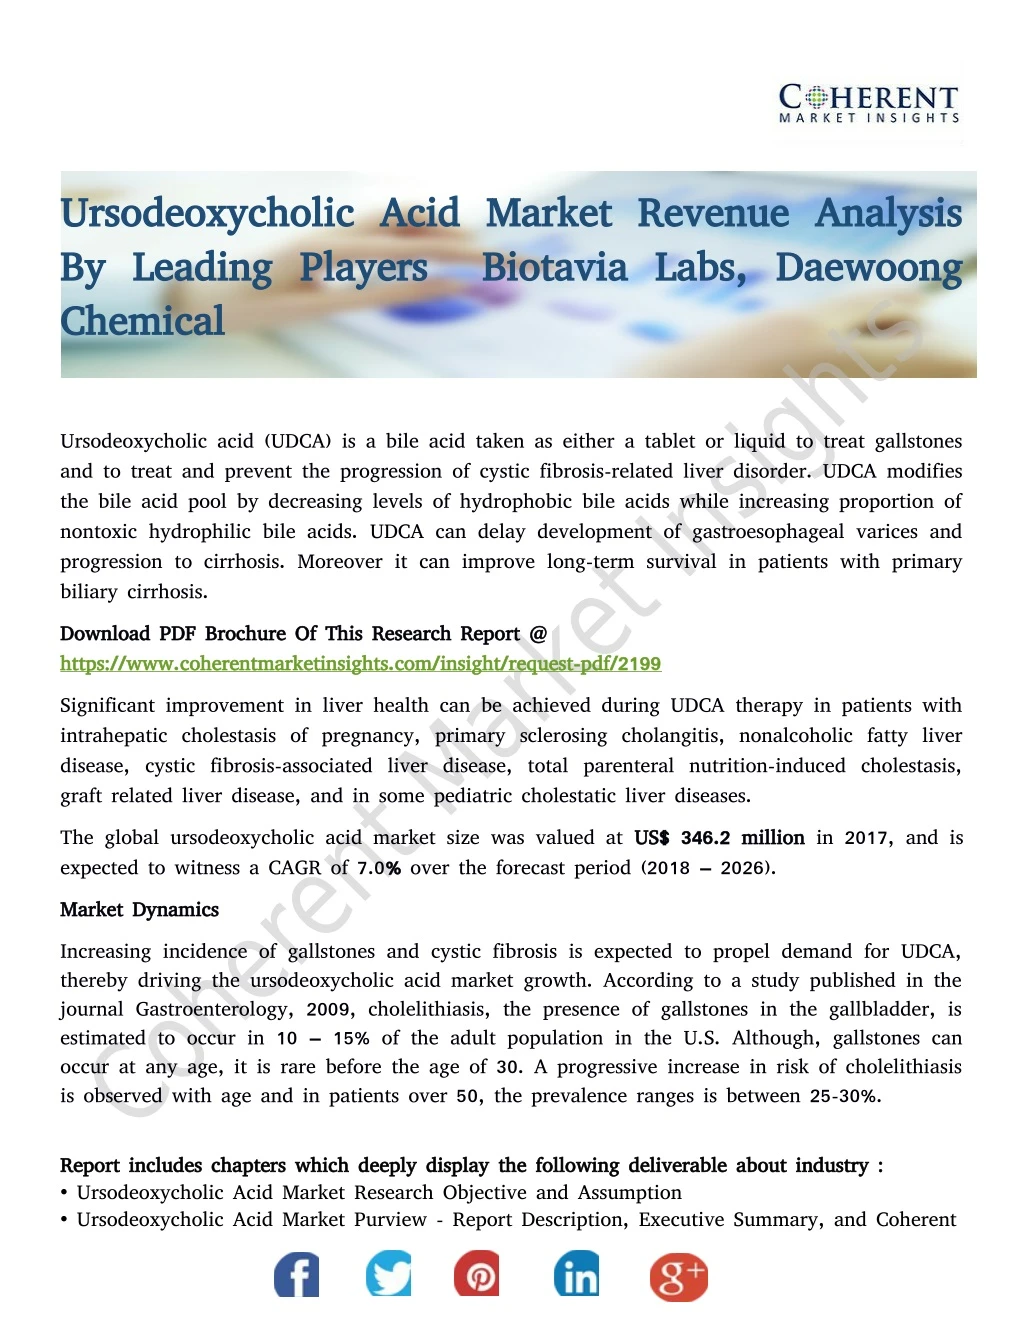 ursodeoxycholic acid market revenue analysis